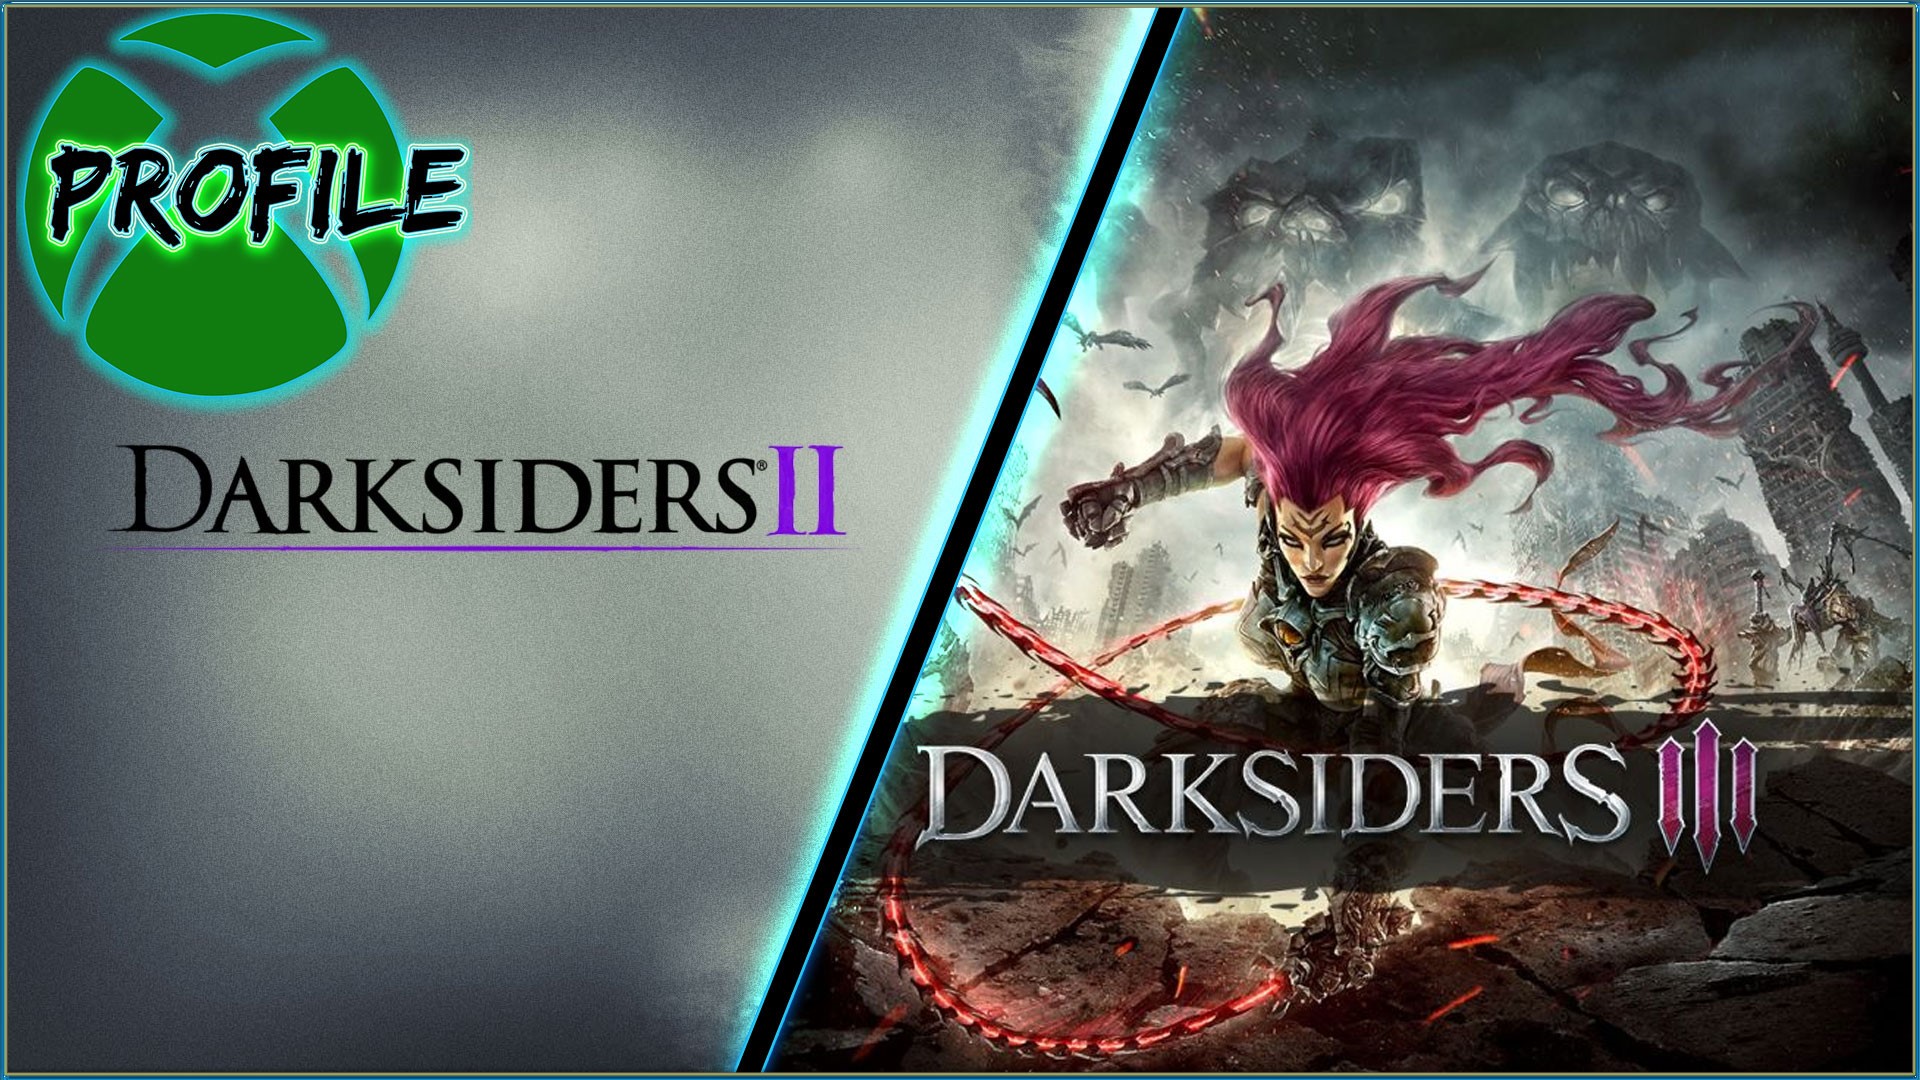 Darksiders III + Darksiders II Deathinitive XBOX ONE